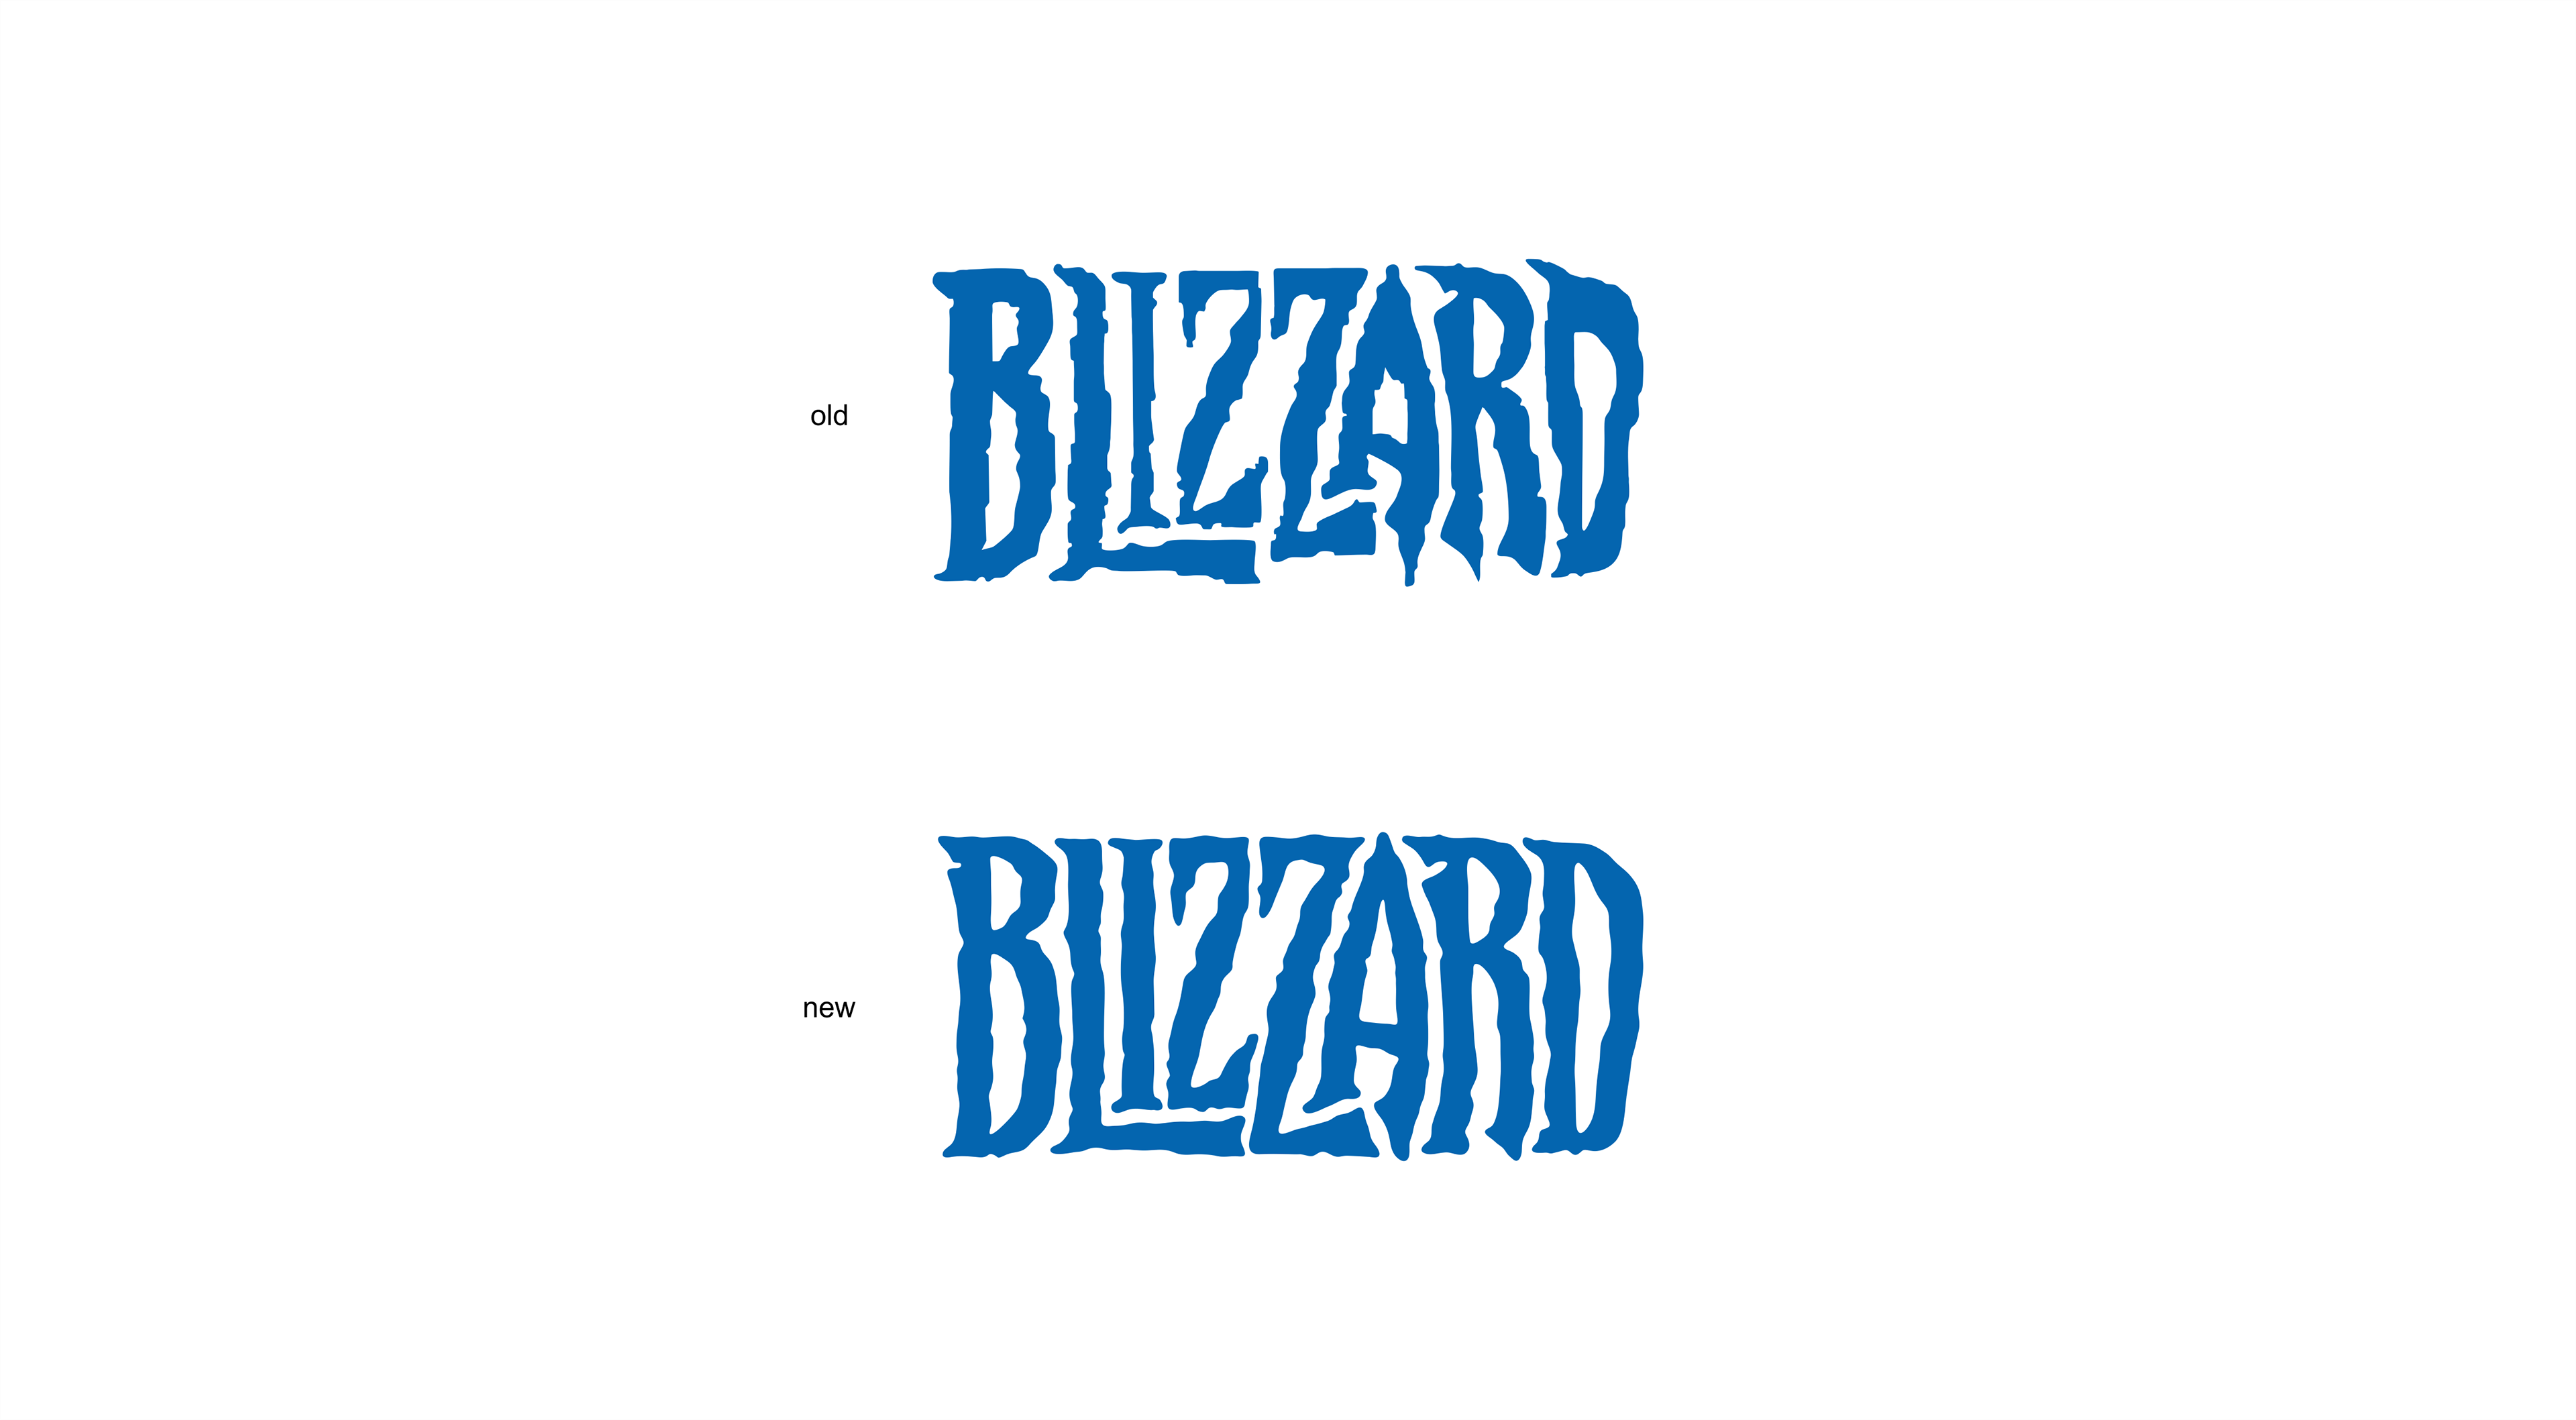 Blizzard Logo - redesign the 